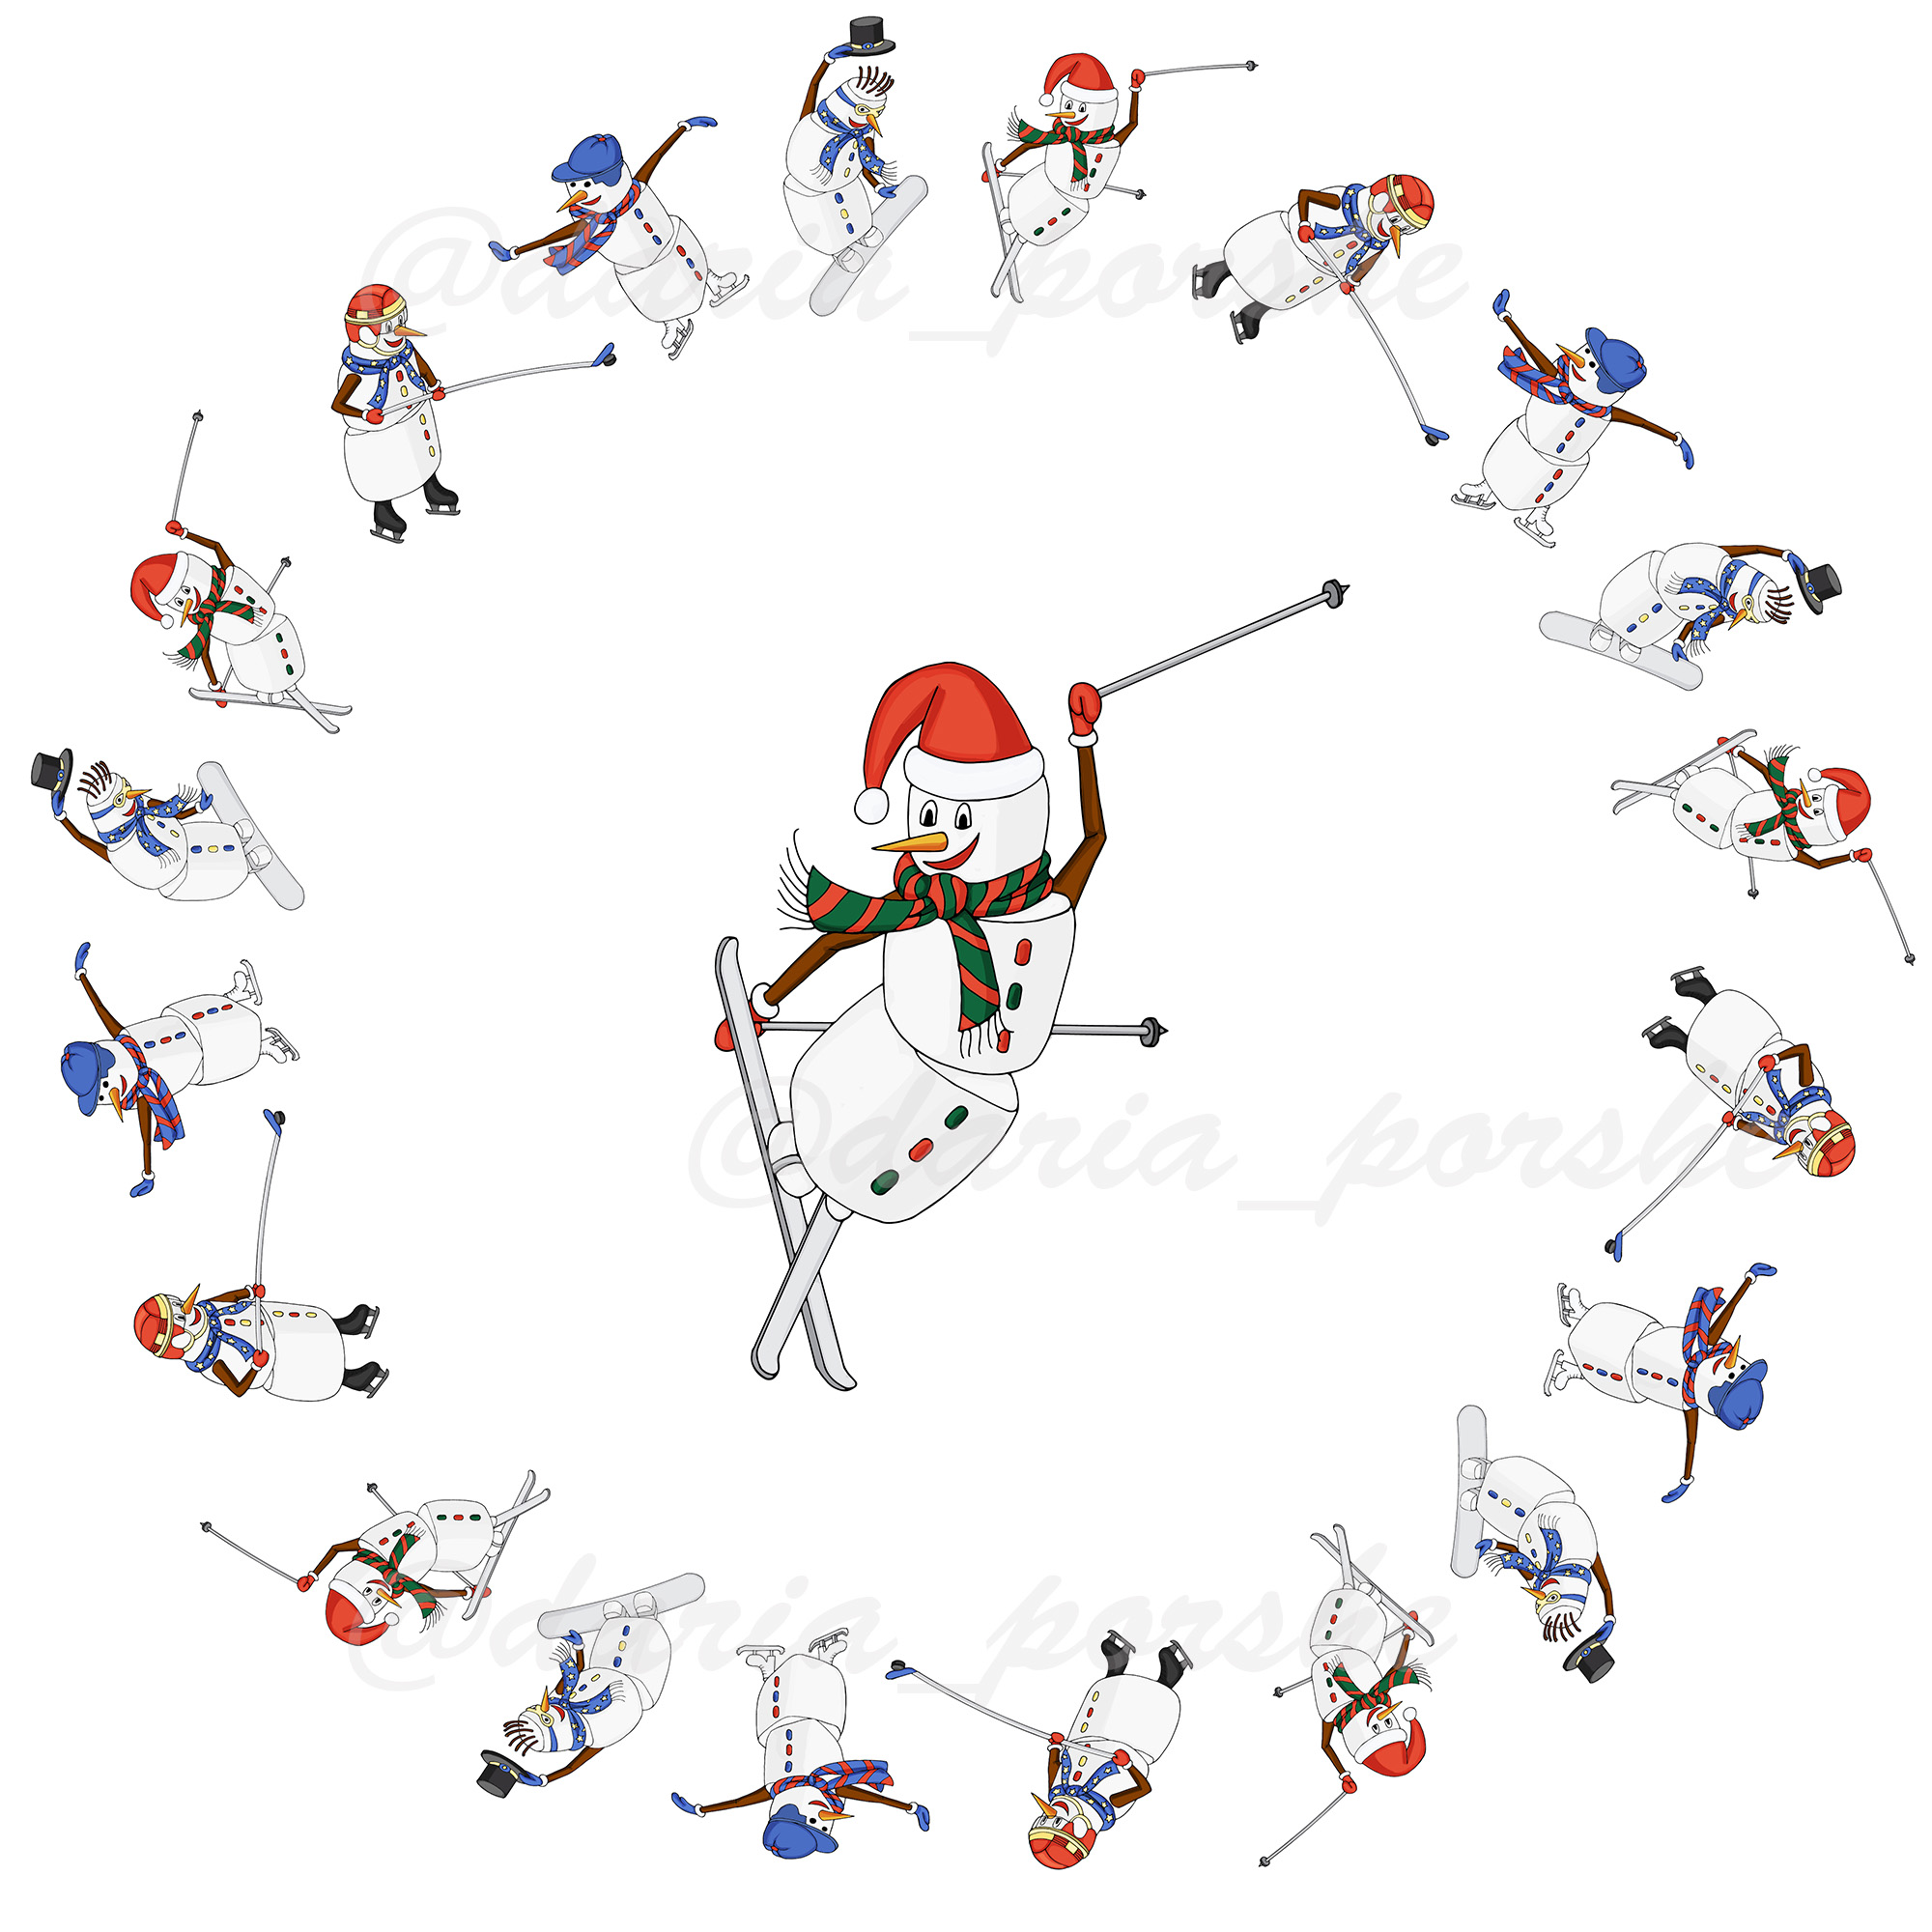 Snowman skier in the circle snownan s sportsmen %d0%b4%d0%bb%d1%8f %d0%b8%d0%bd%d1%81%d1%82